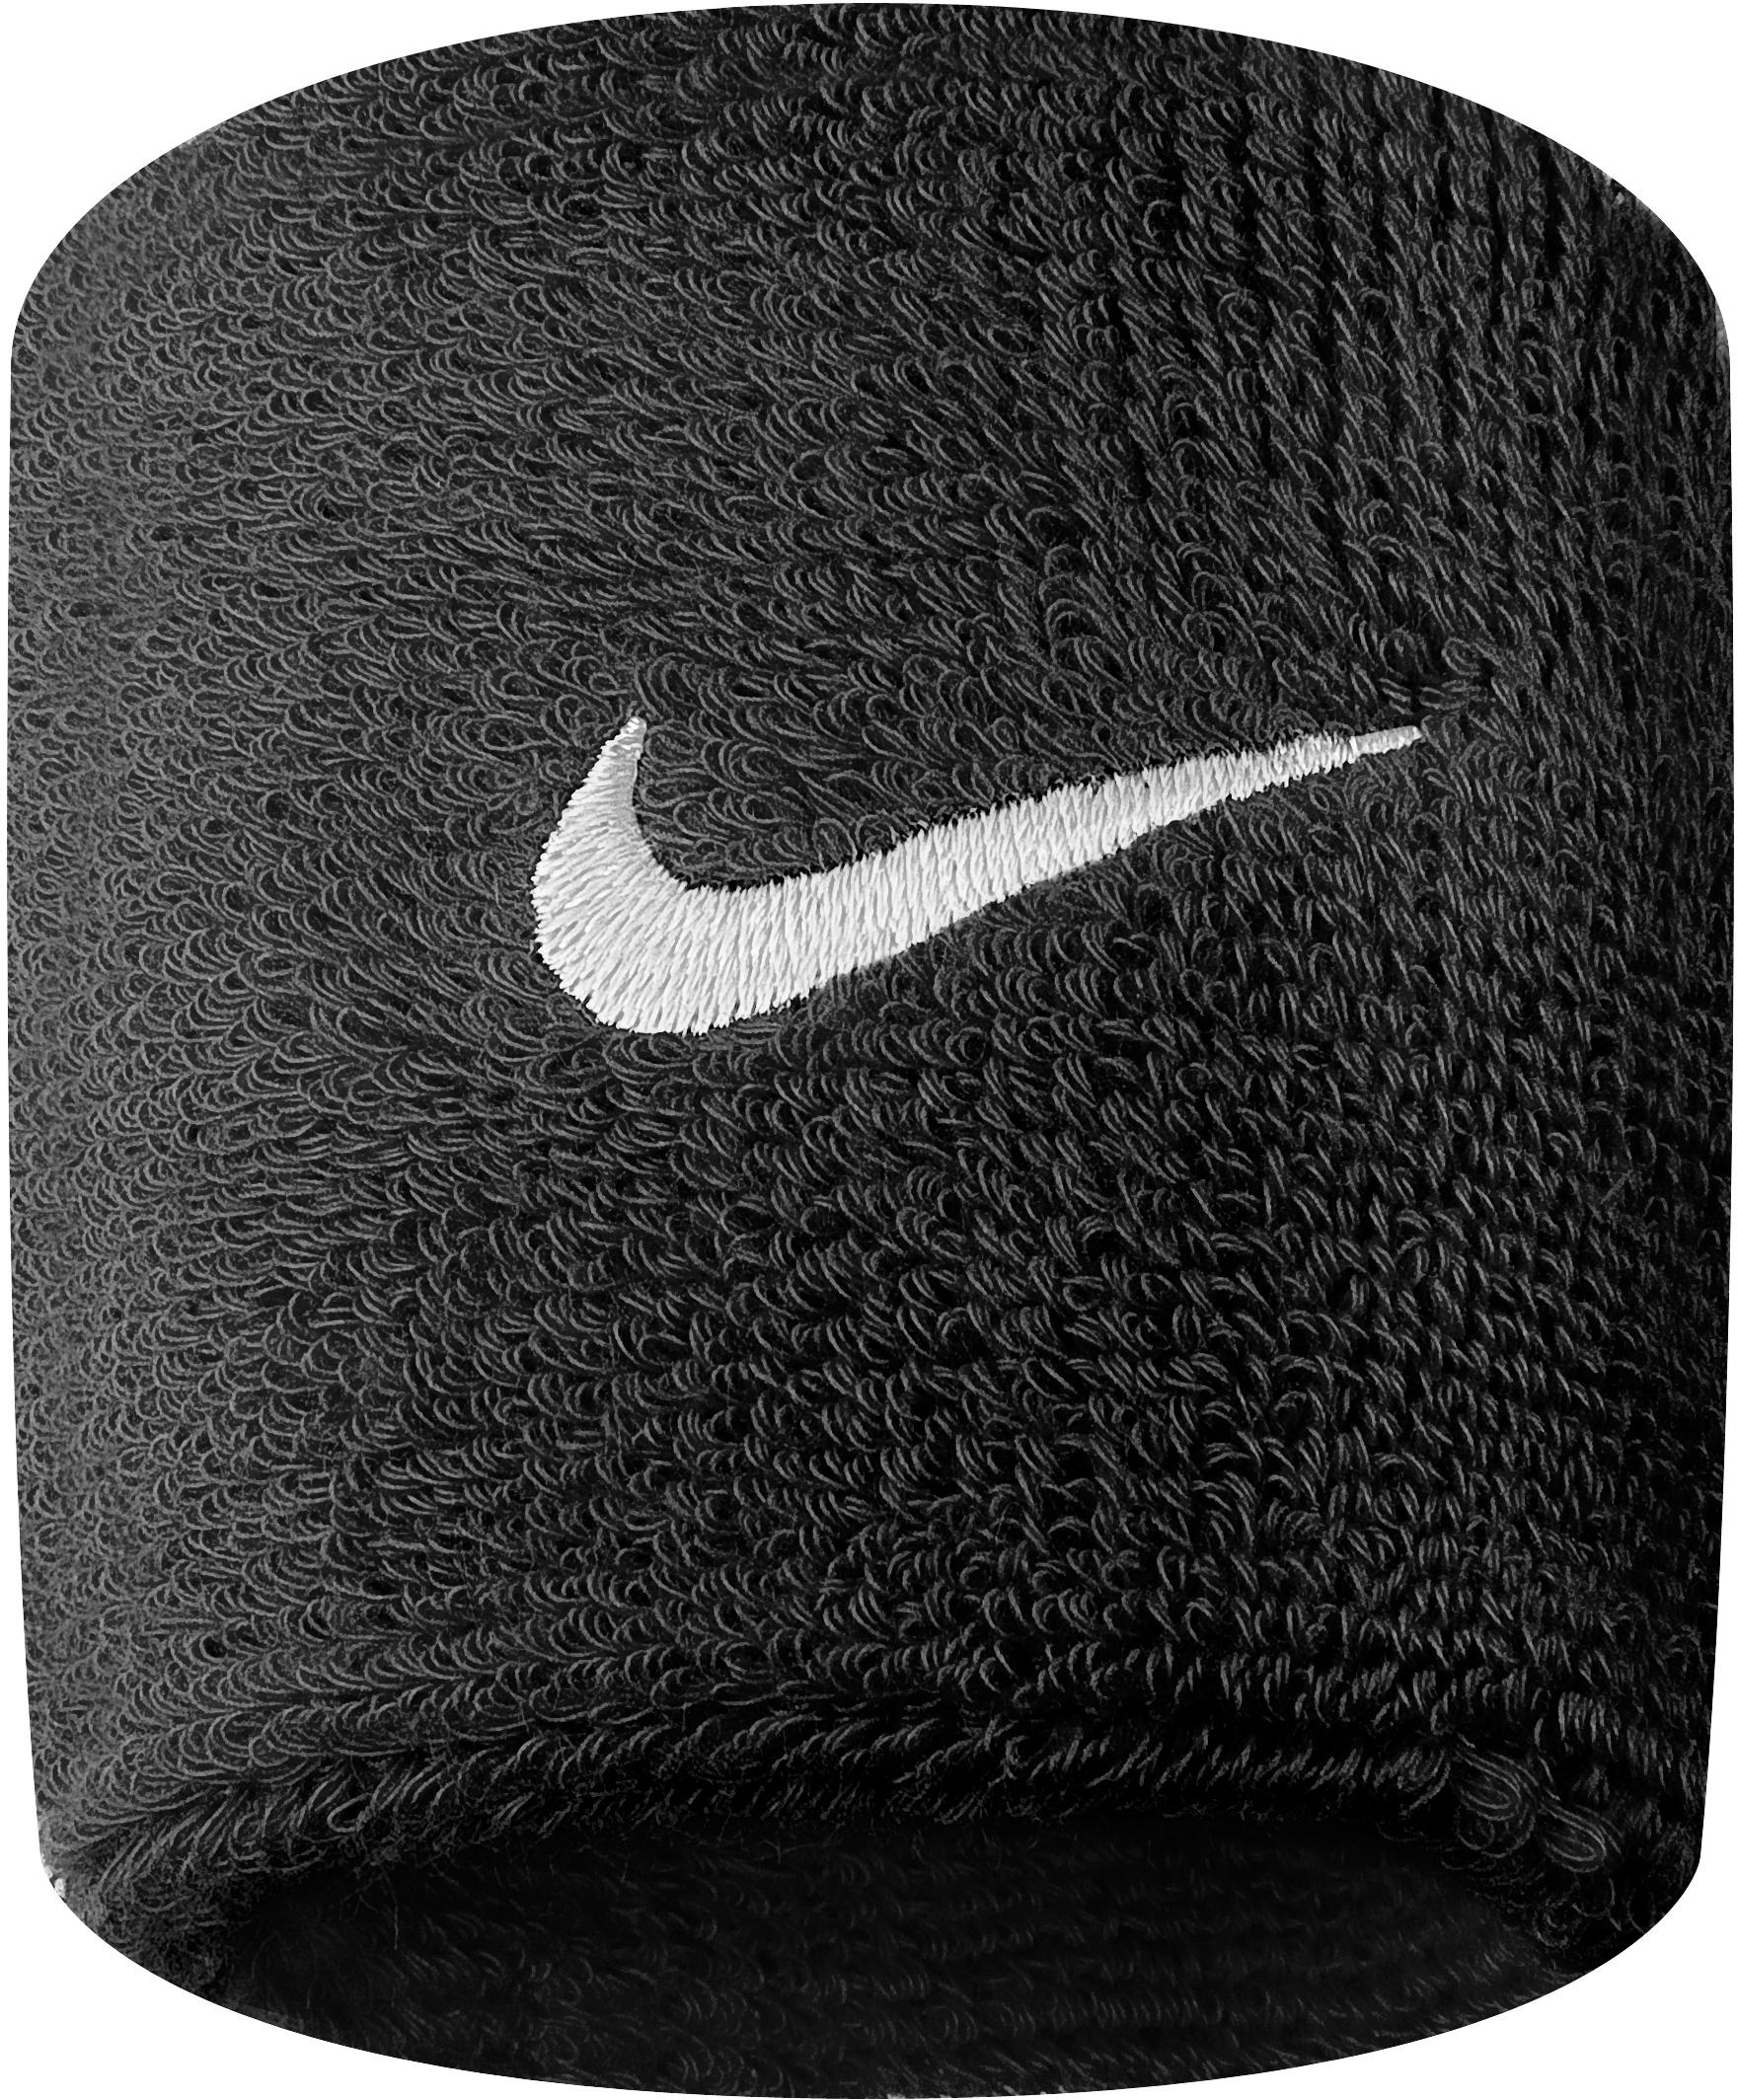 Nike Swoosh Wristband - Black/white